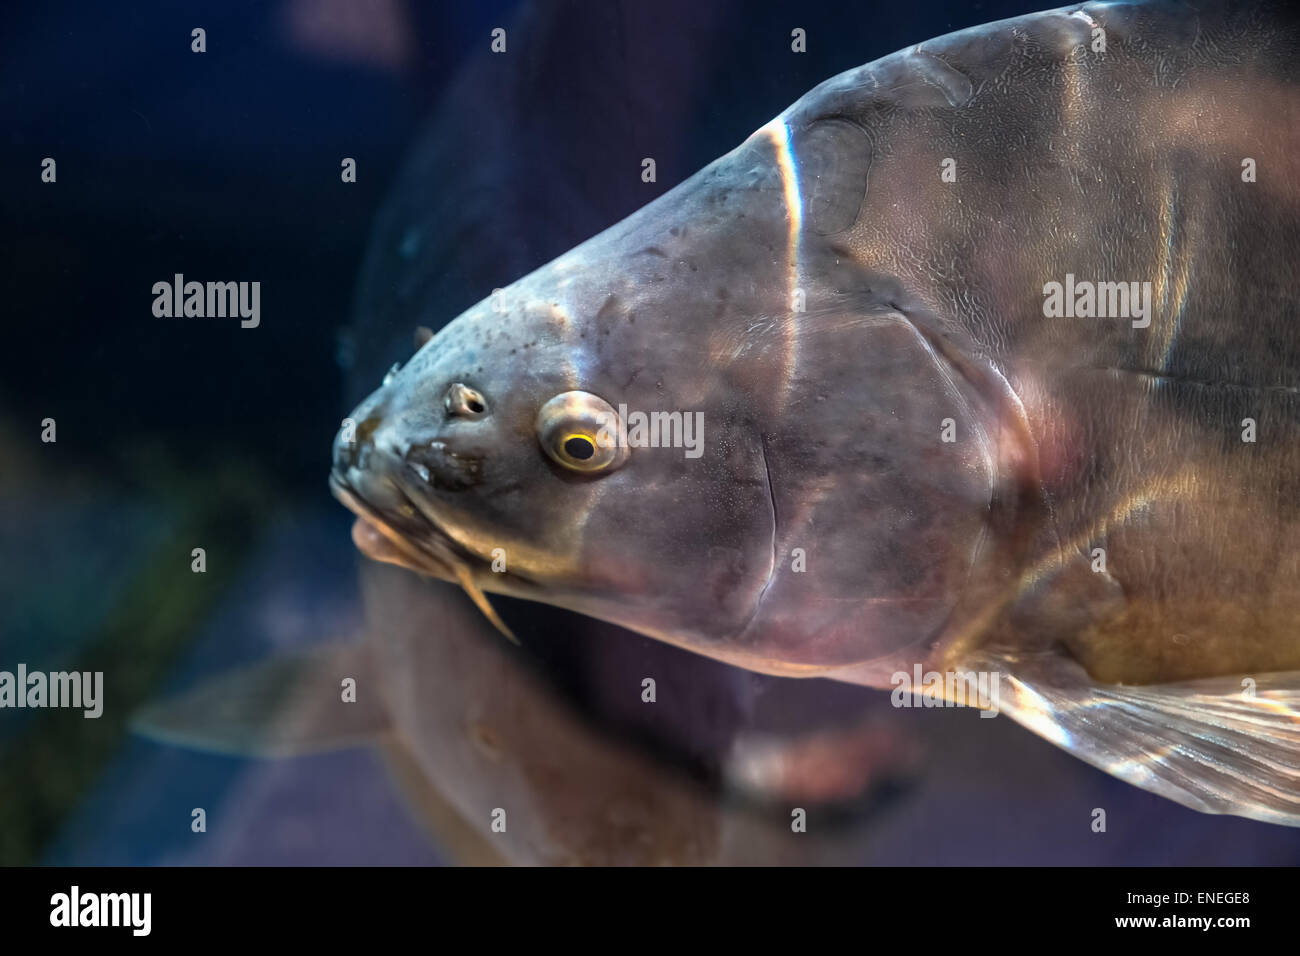 Carp fish in aquarium or reservoir under water on  fish farm Stock Photo